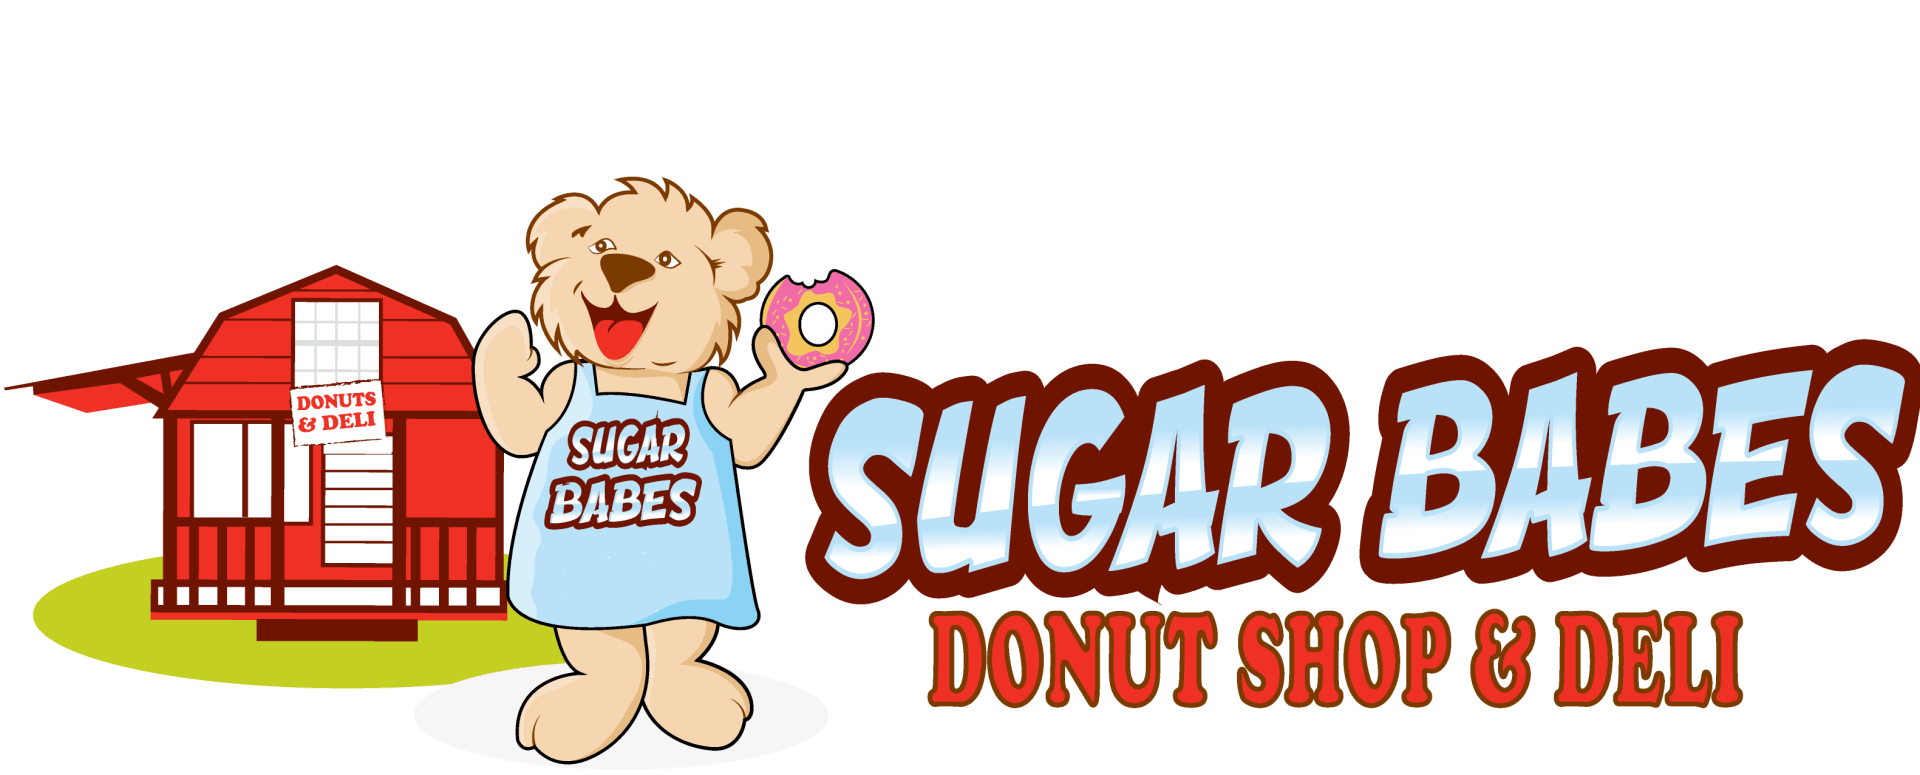 Sugar Babes Donut Shop & Deli